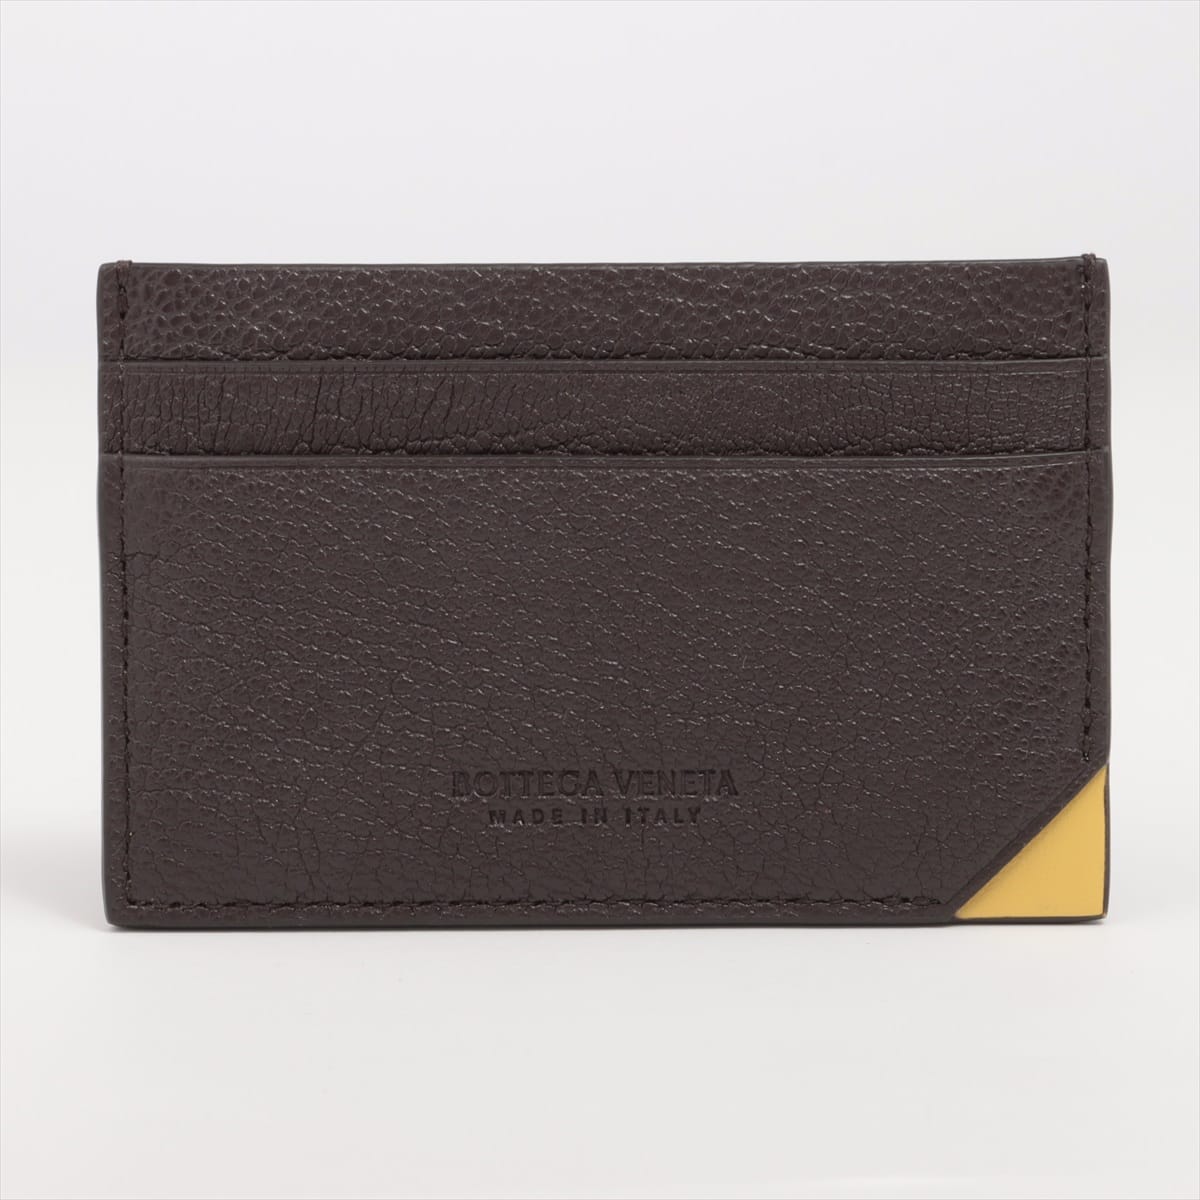 Bottega Veneta Leather Card Case Brown